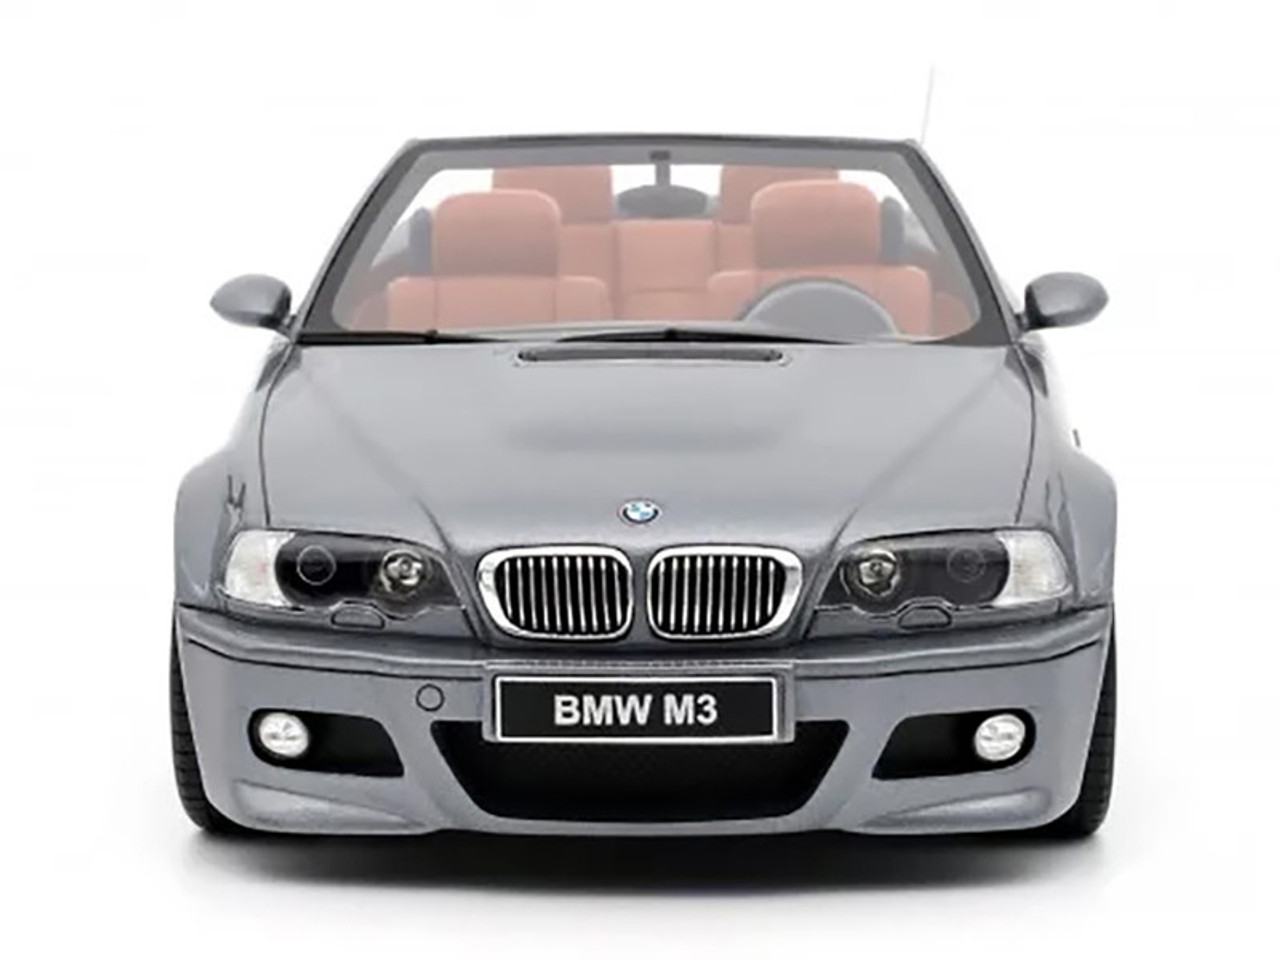 2004 BMW E46 M3 Convertible - Silver Gray Metallic - 1:18 Model by Otto Mobile